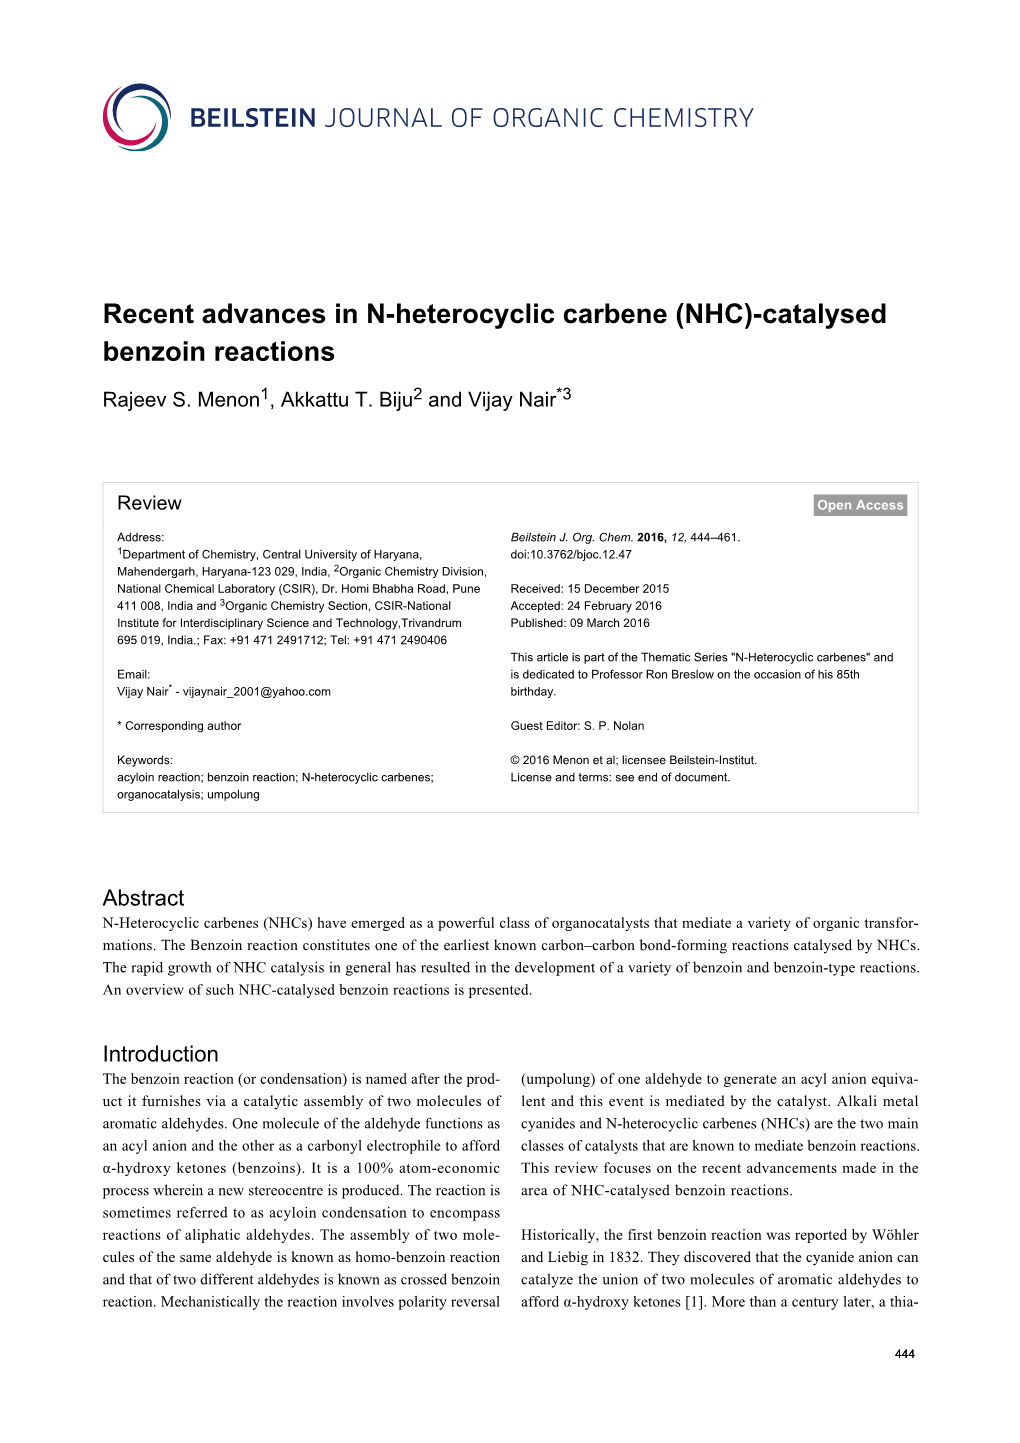 (NHC)-Catalysed Benzoin Reactions